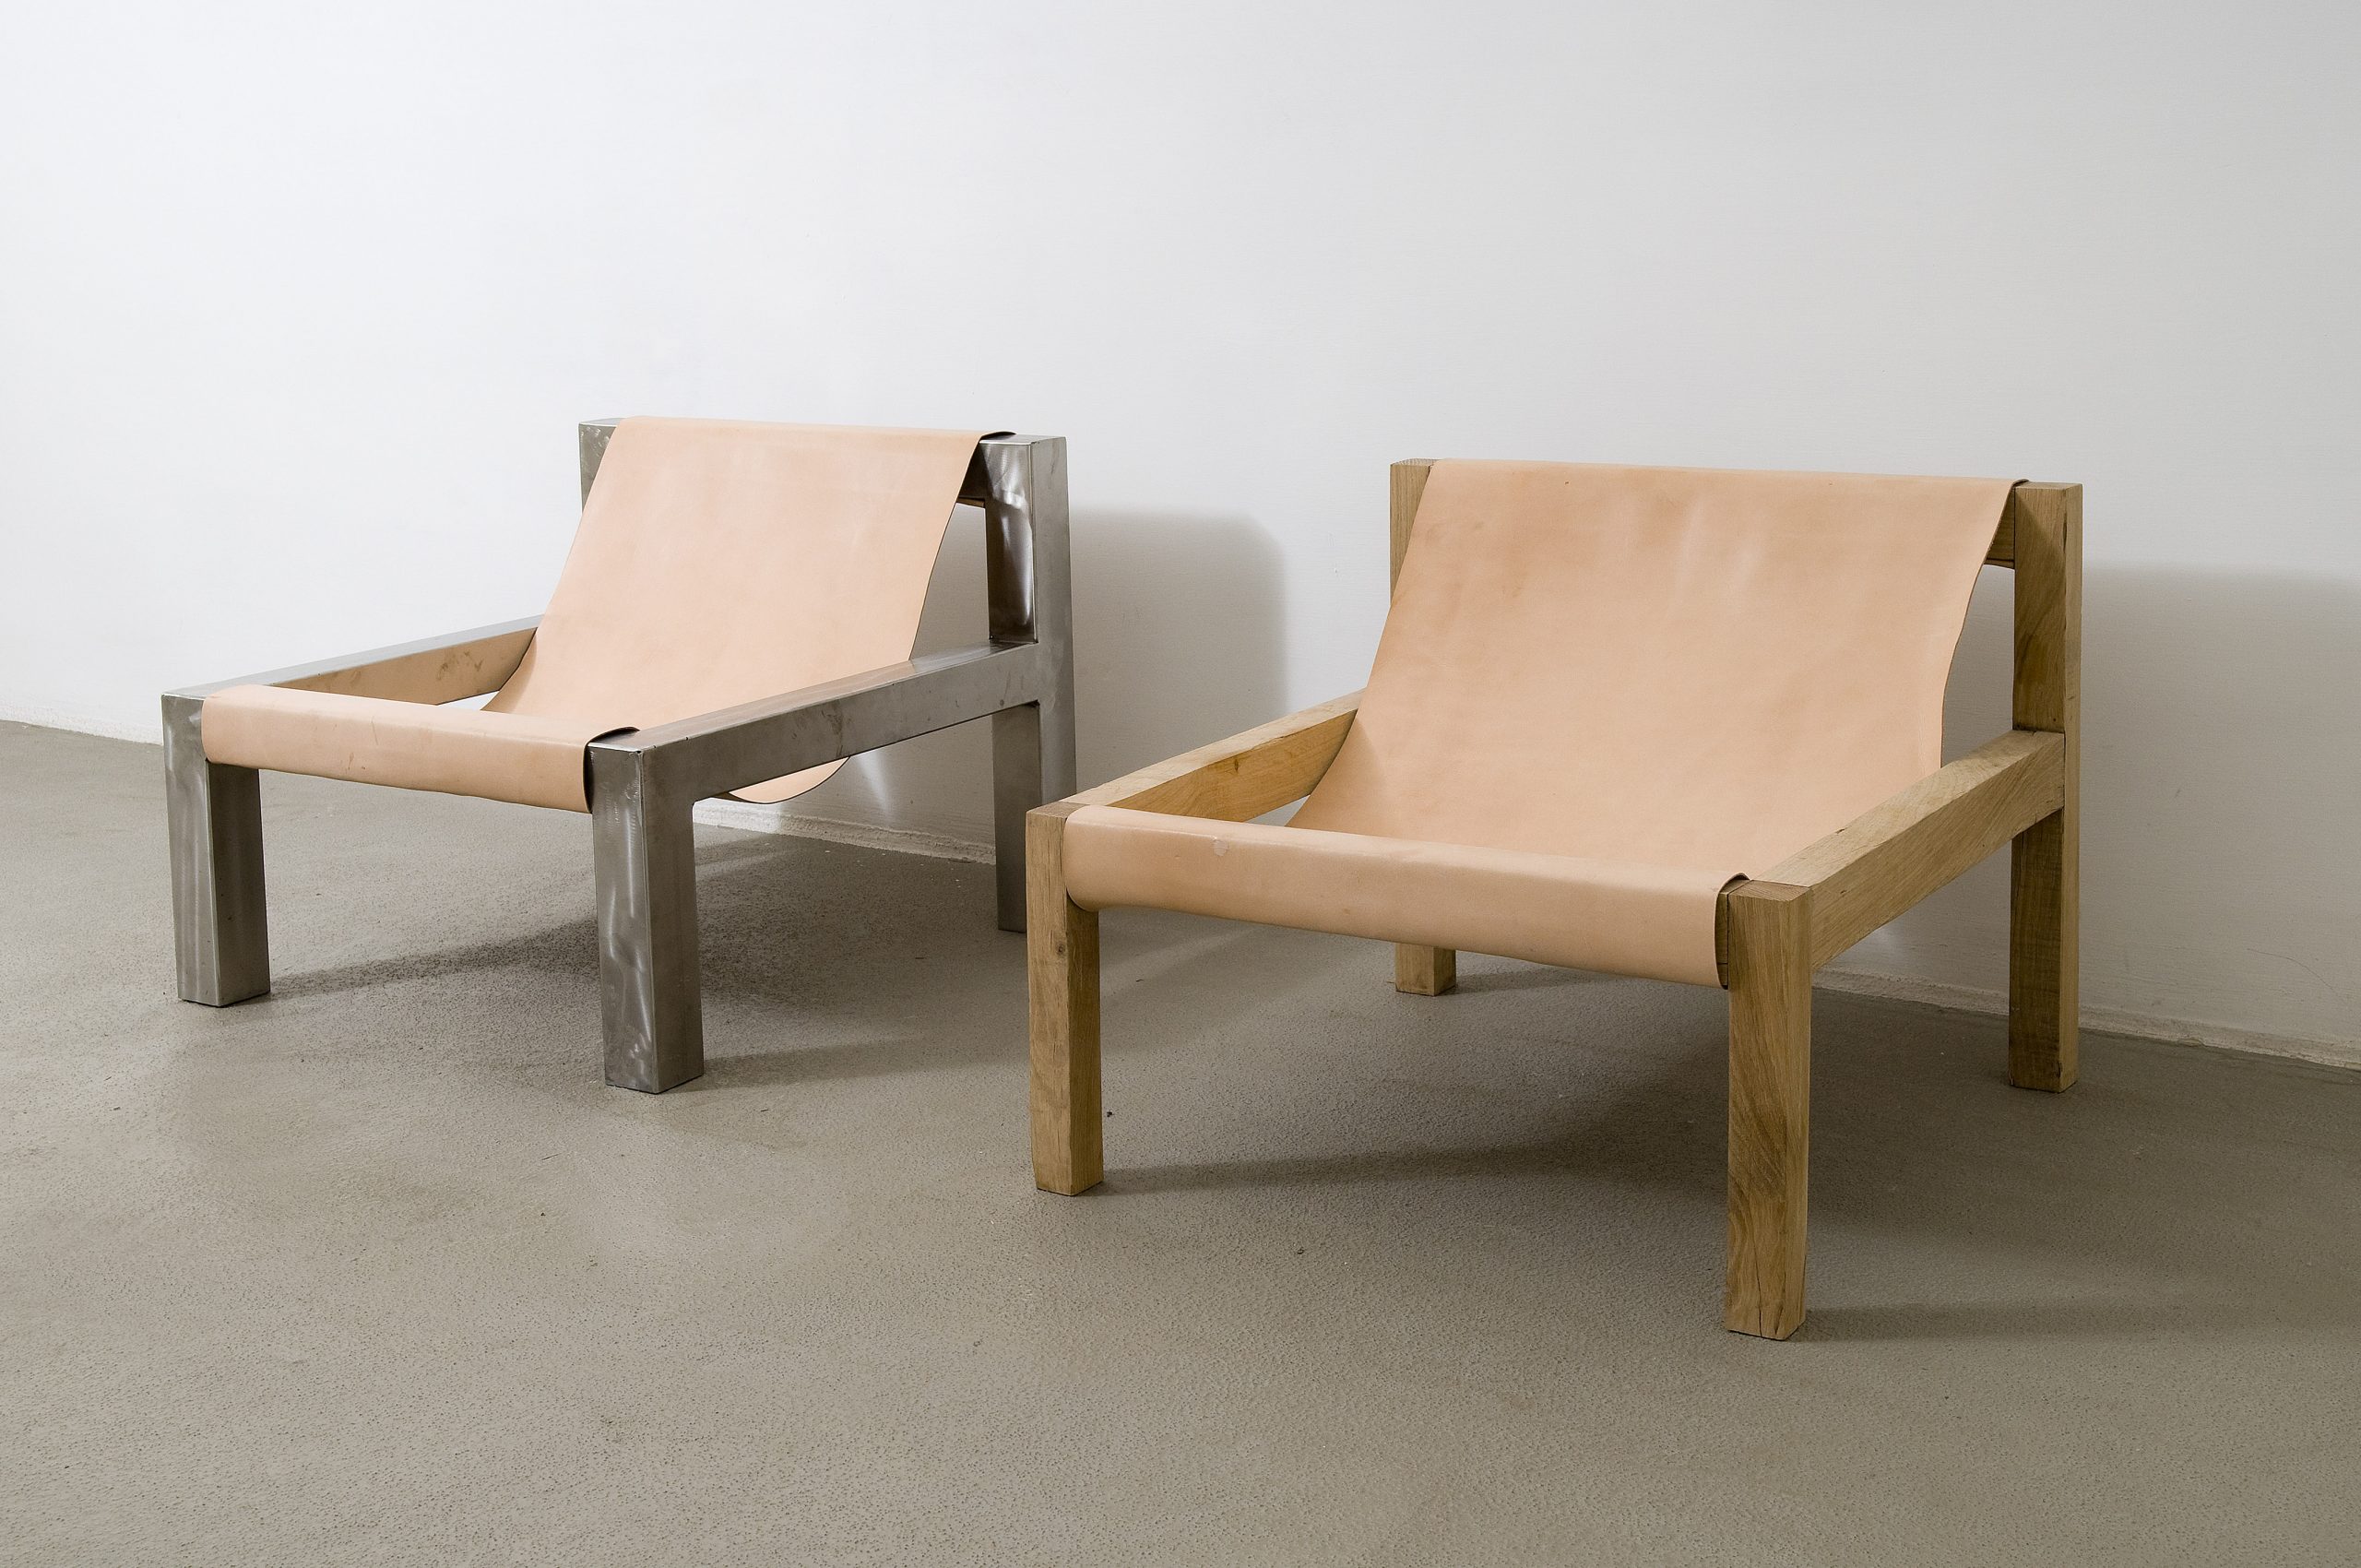 Oscar Tuazon, Two Possible Chairs IV, 2012. Photo by Giorgio Benni